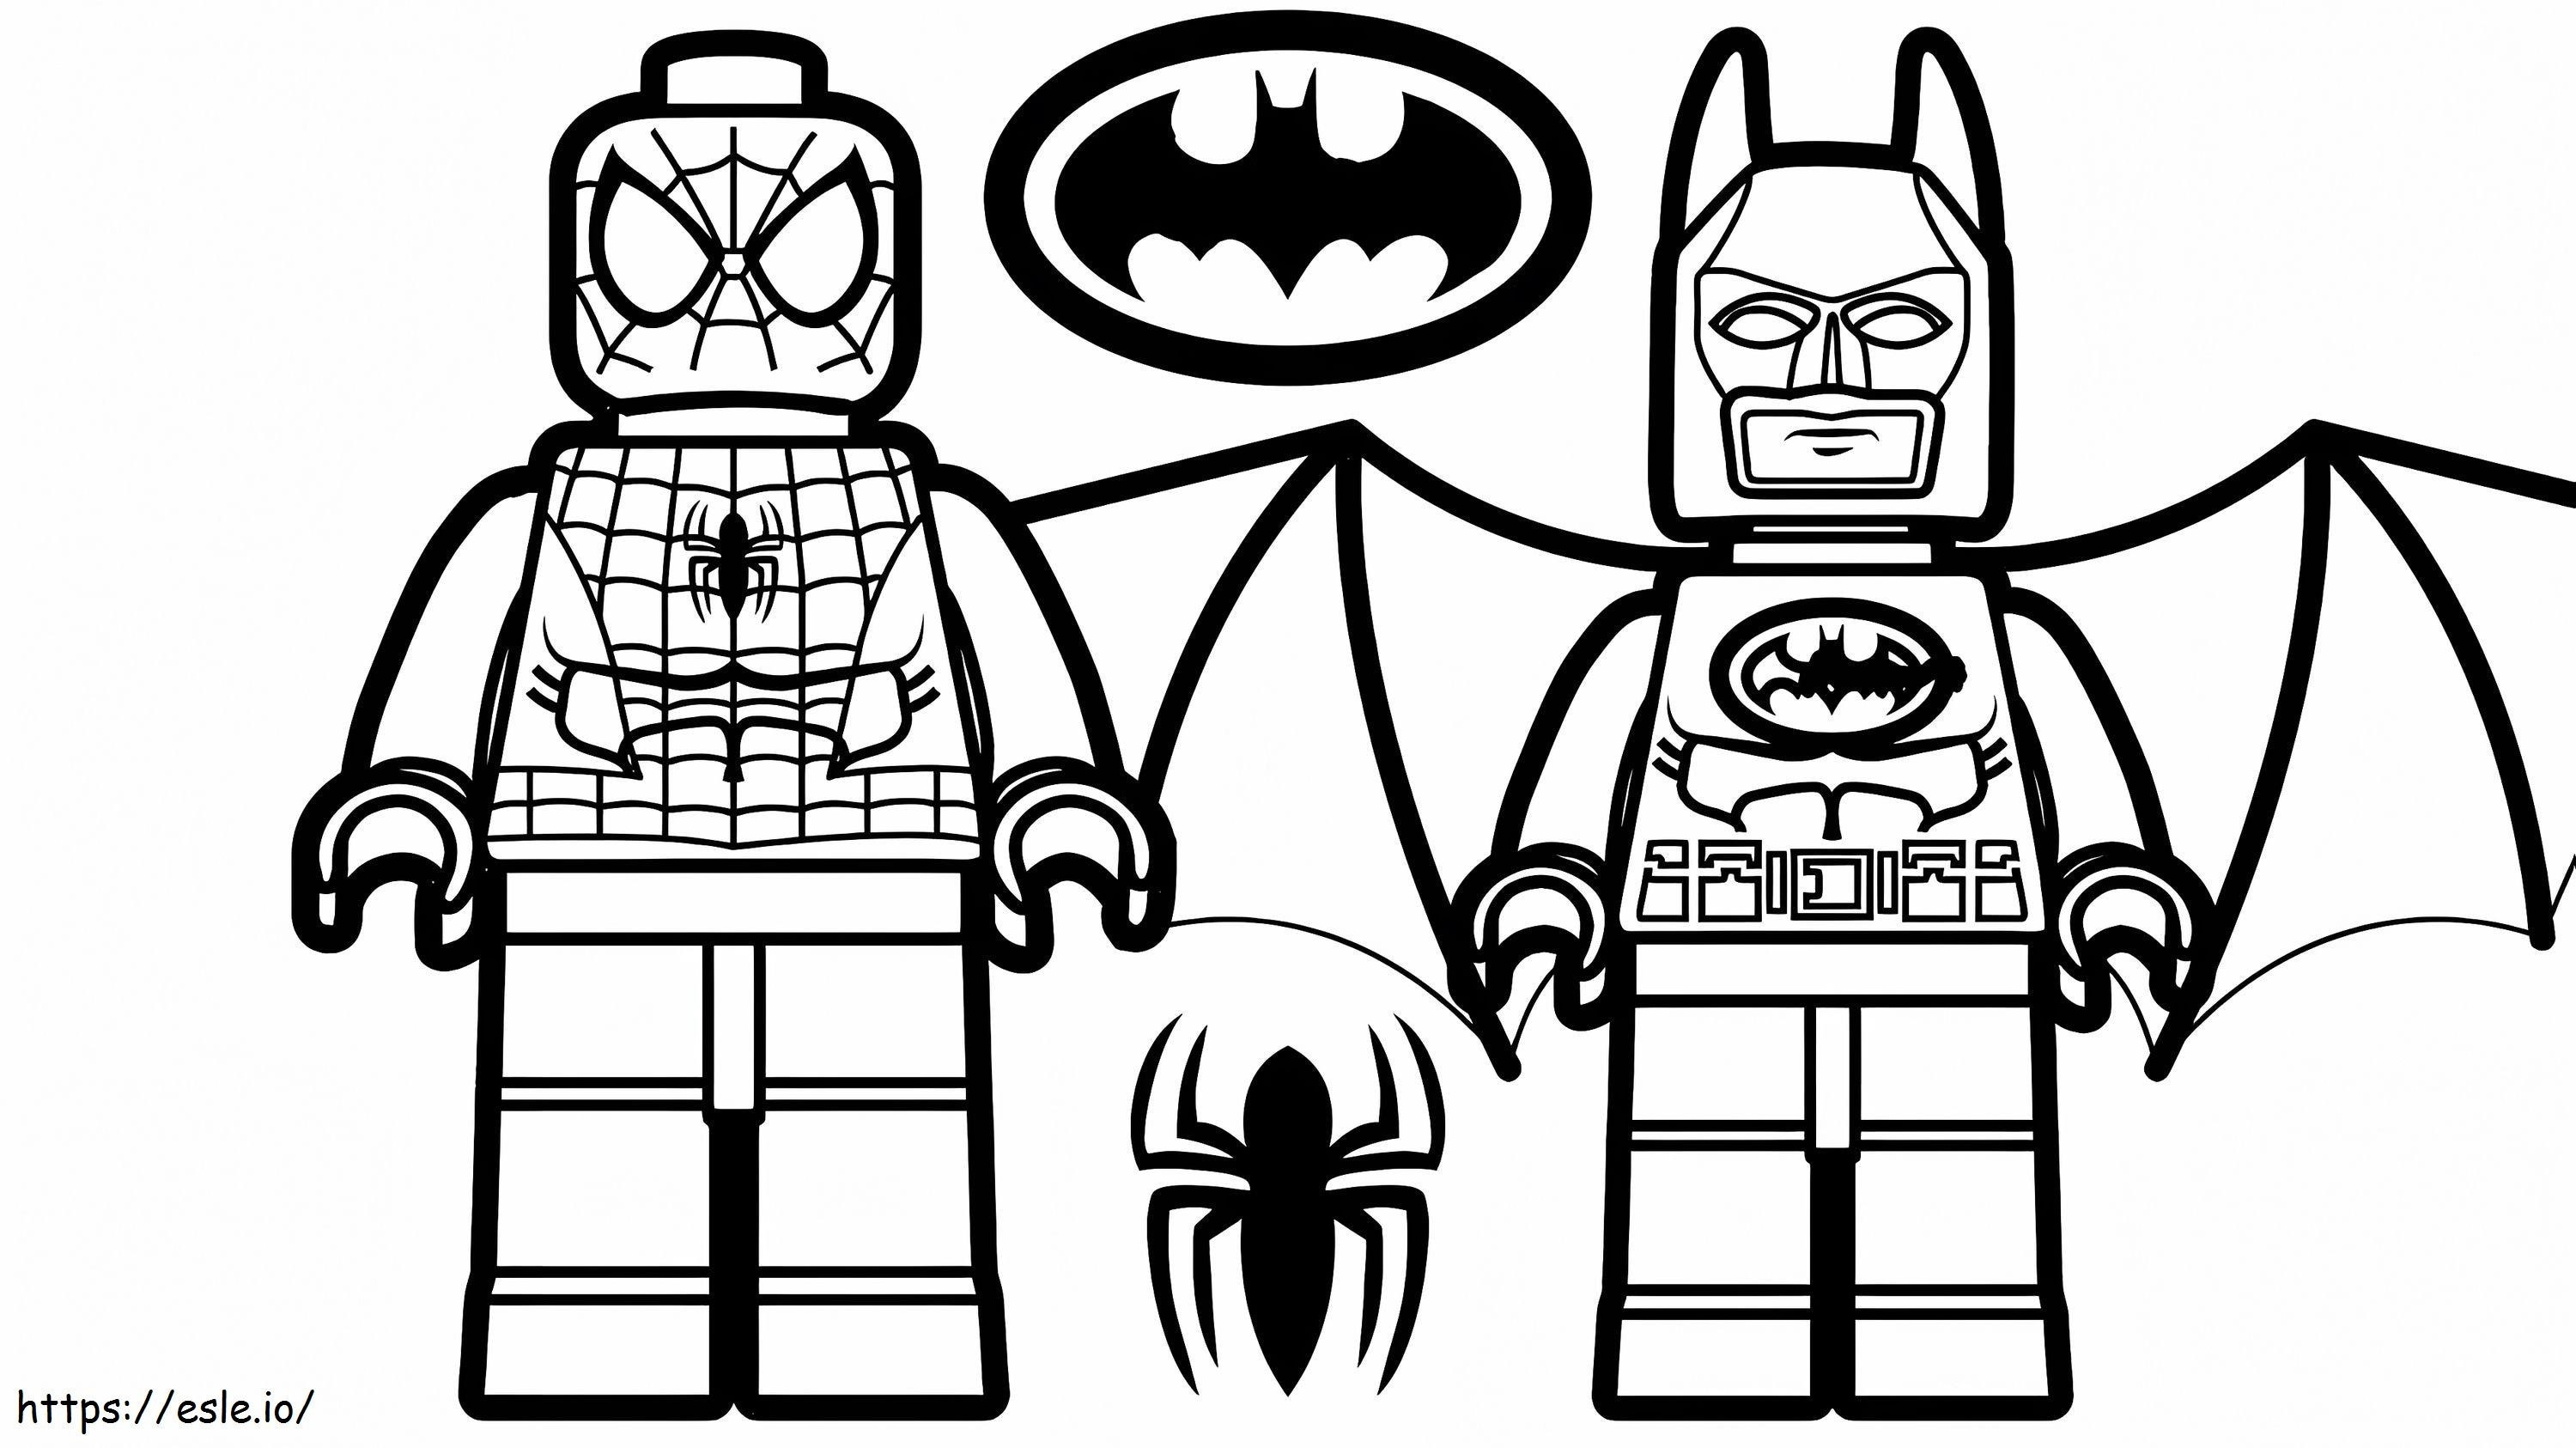 1532141570 Lego Spiderman And Lego Batman A4 E1600348956736 coloring page